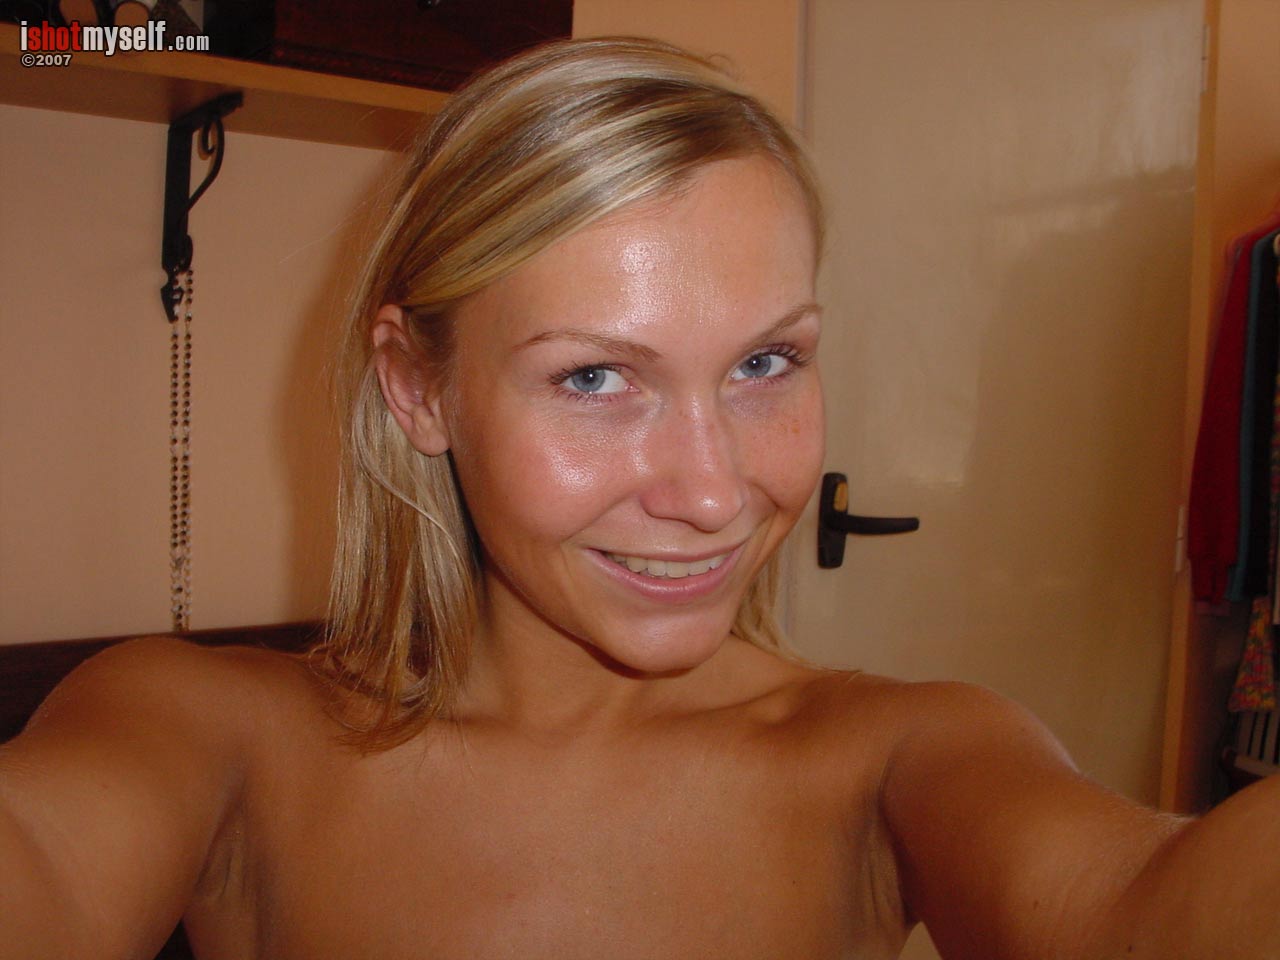 Fiala Nude Blonde Taned Pussy Selfie Ishotmyself